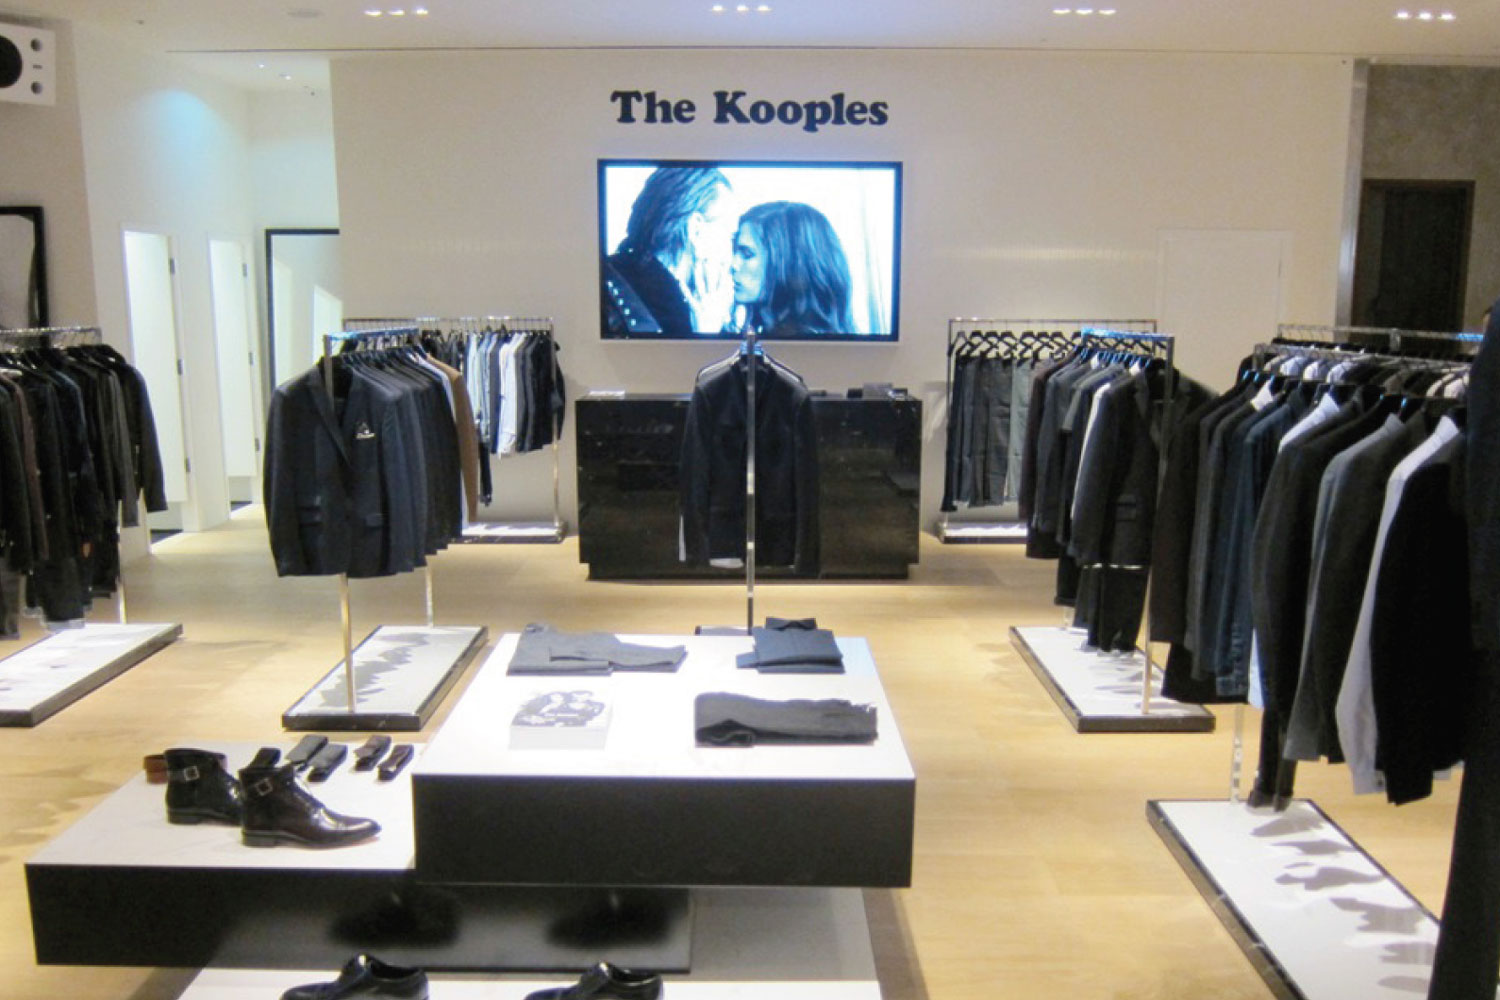  The Kooples - Selfridges 